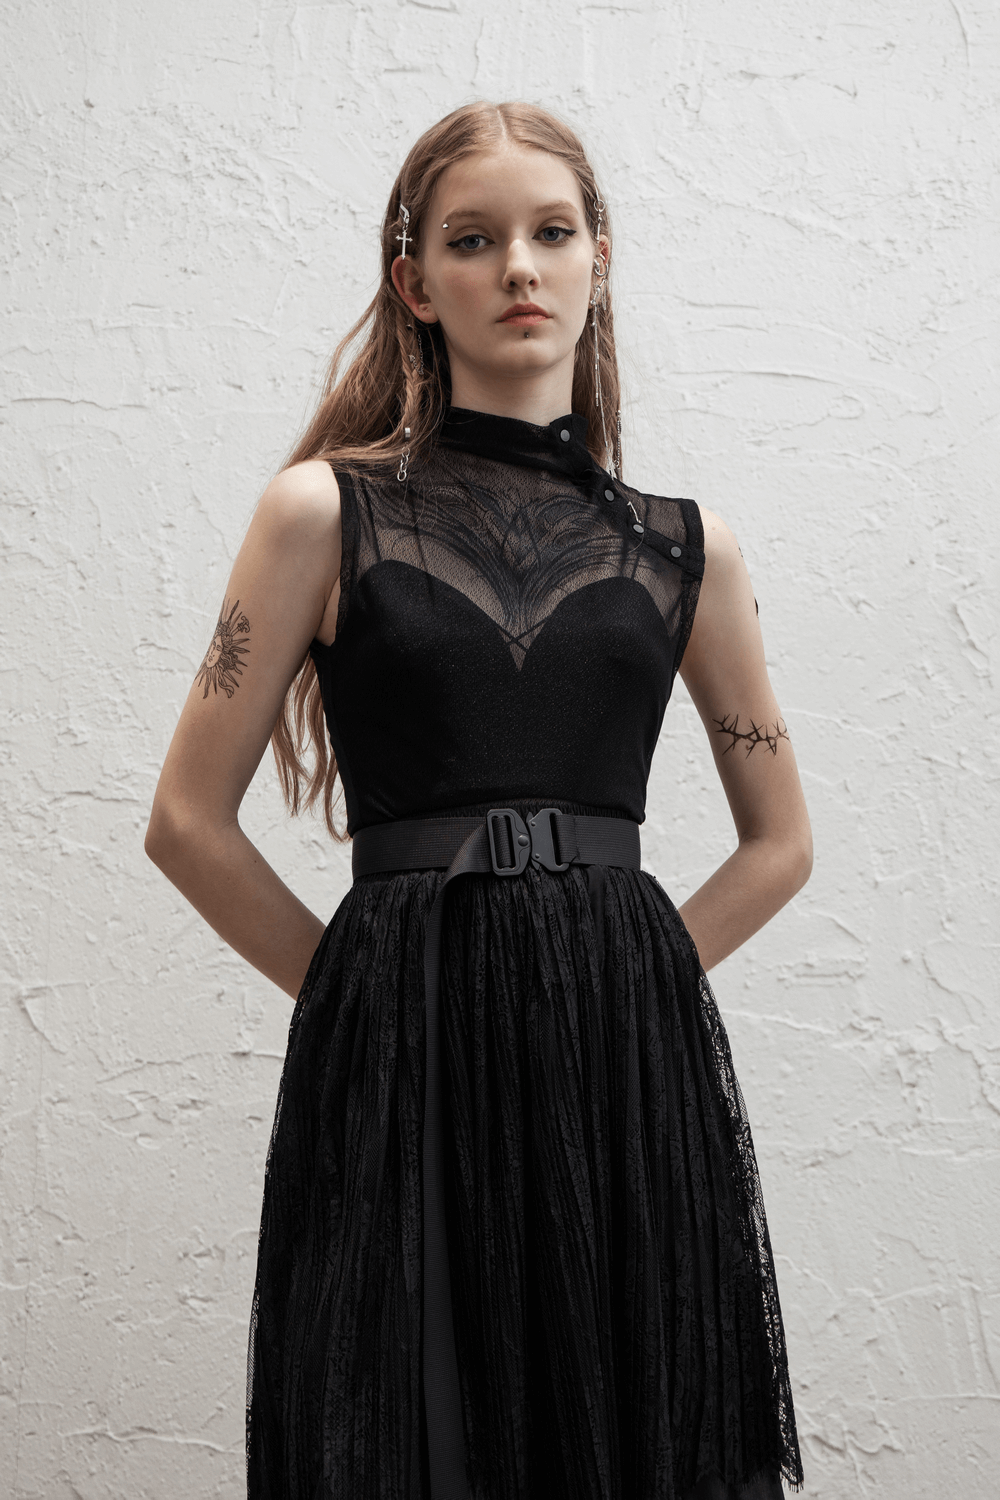 Elegant Gothic Black Mesh Top Sleeveless with High Neck